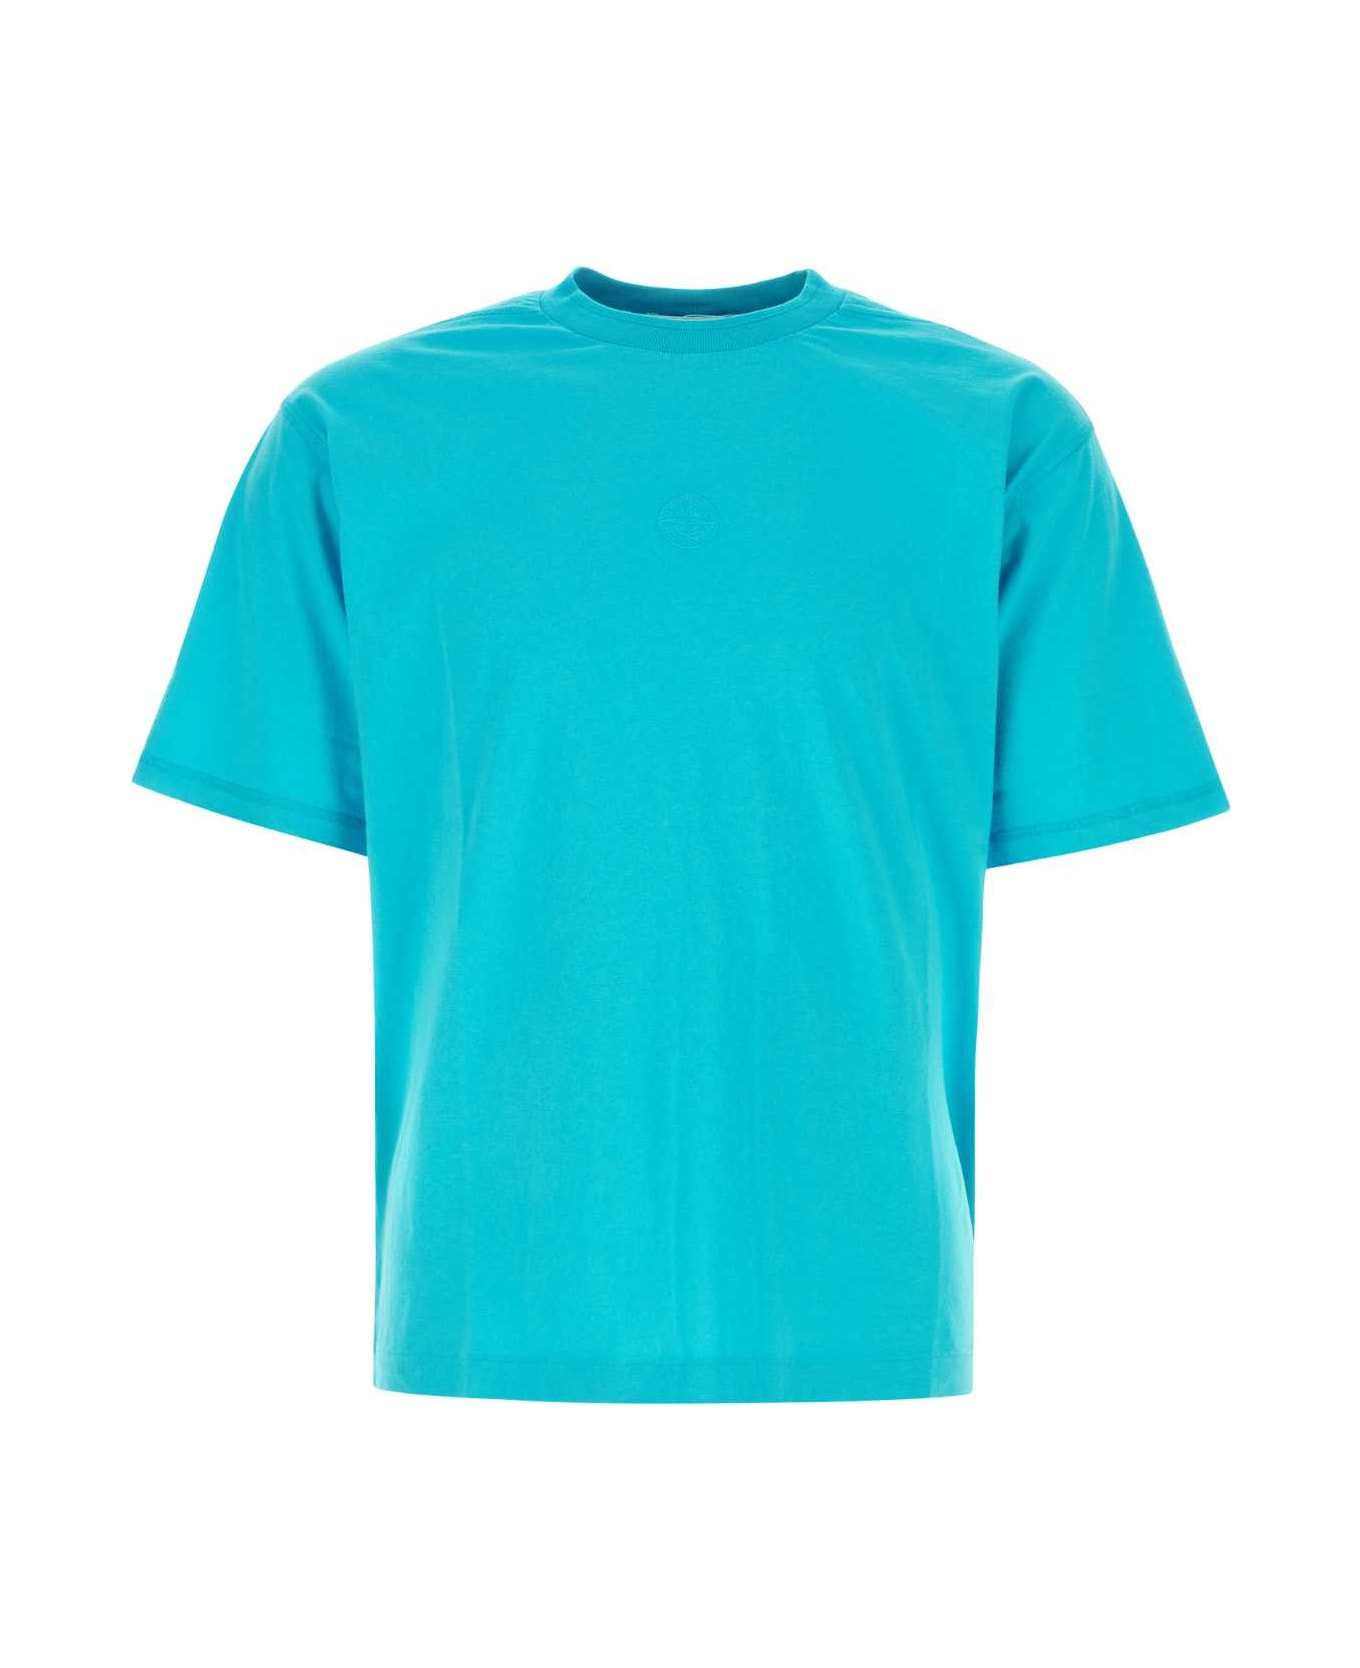 Stone Island Cotton T-shirt - V0042 シャツ